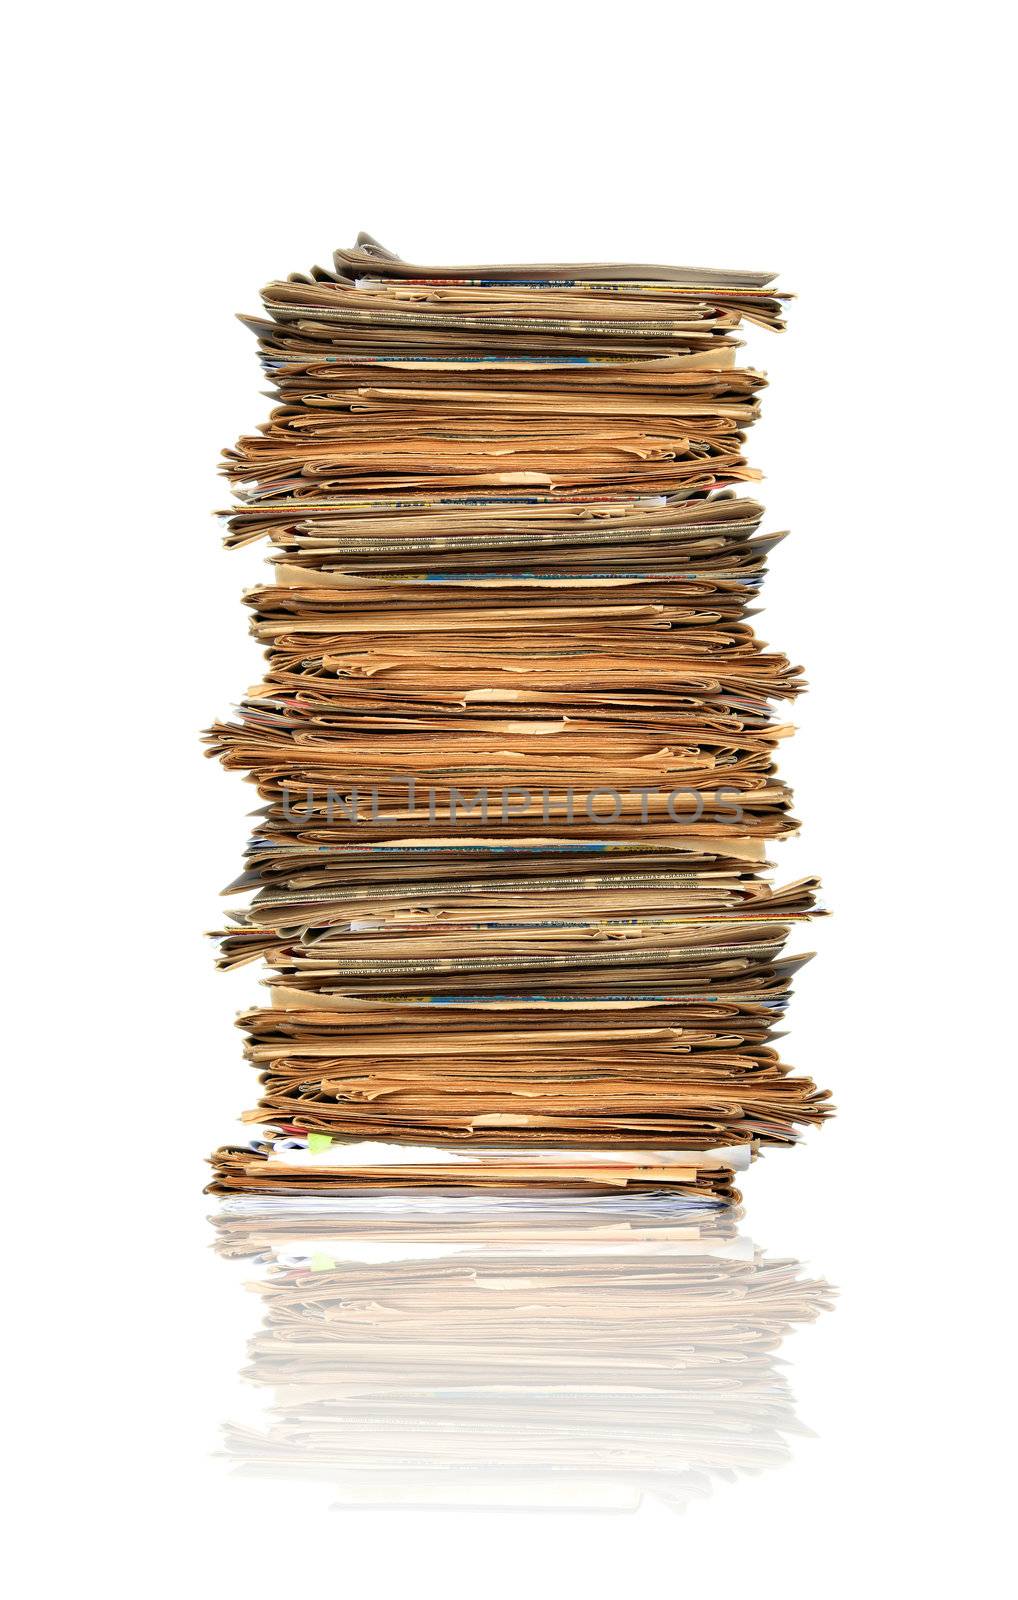 Heap of papers by Kudryashka